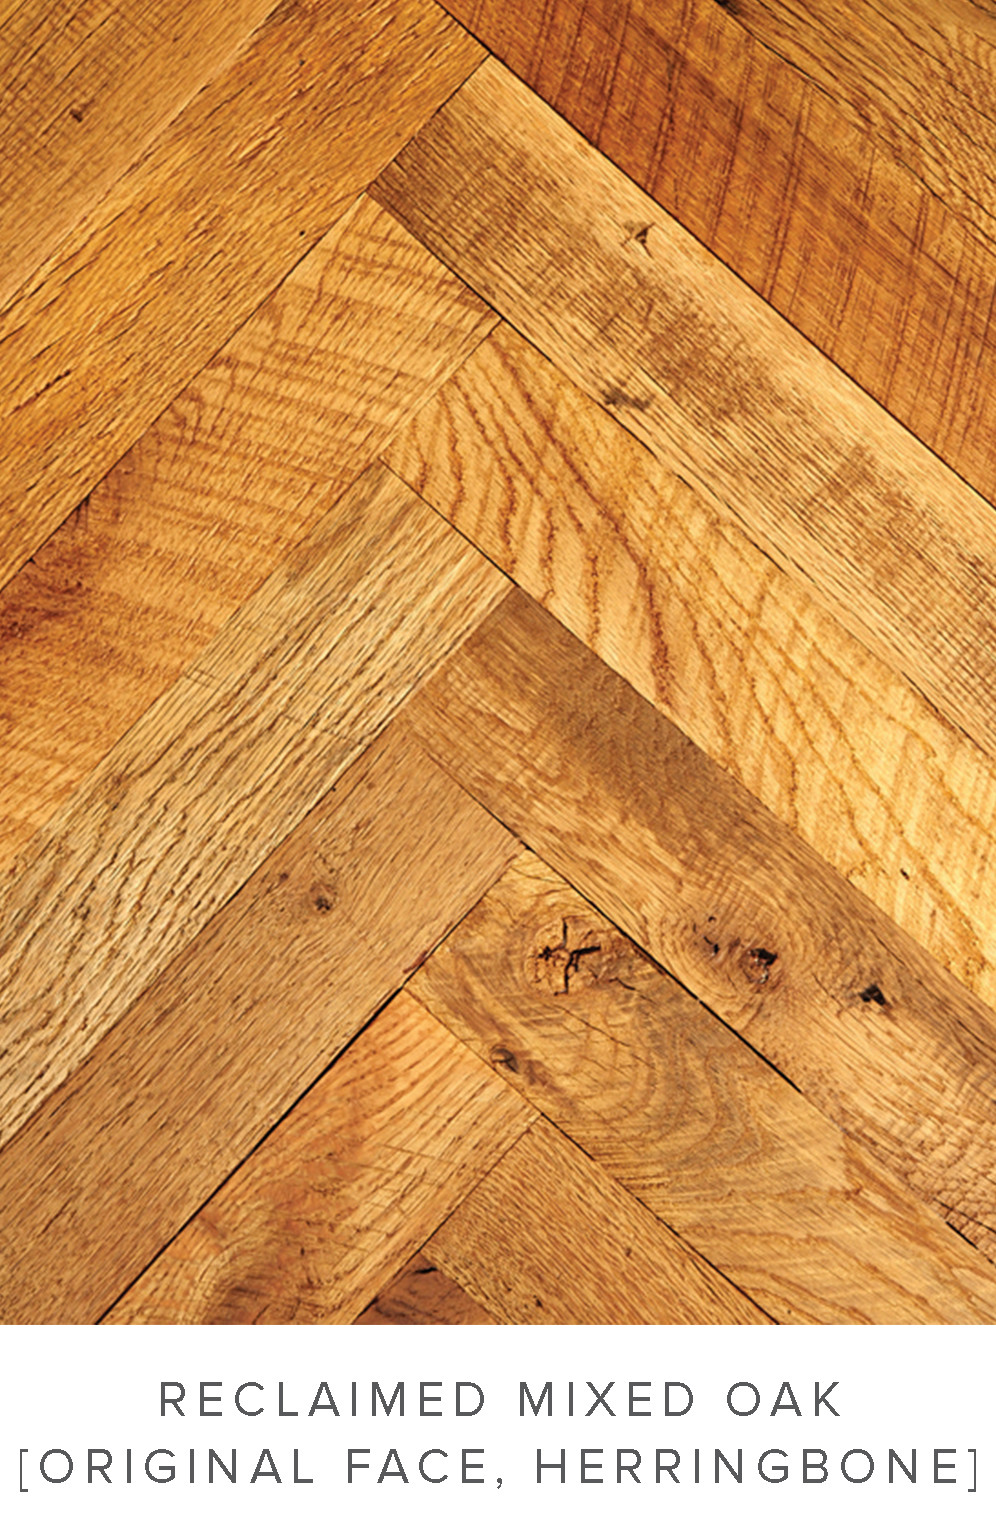 20 Amazing Old Maple Hardwood Flooring 2024 free download old maple hardwood flooring of reclaimed old with reclaimed mixed oak original face herringbone